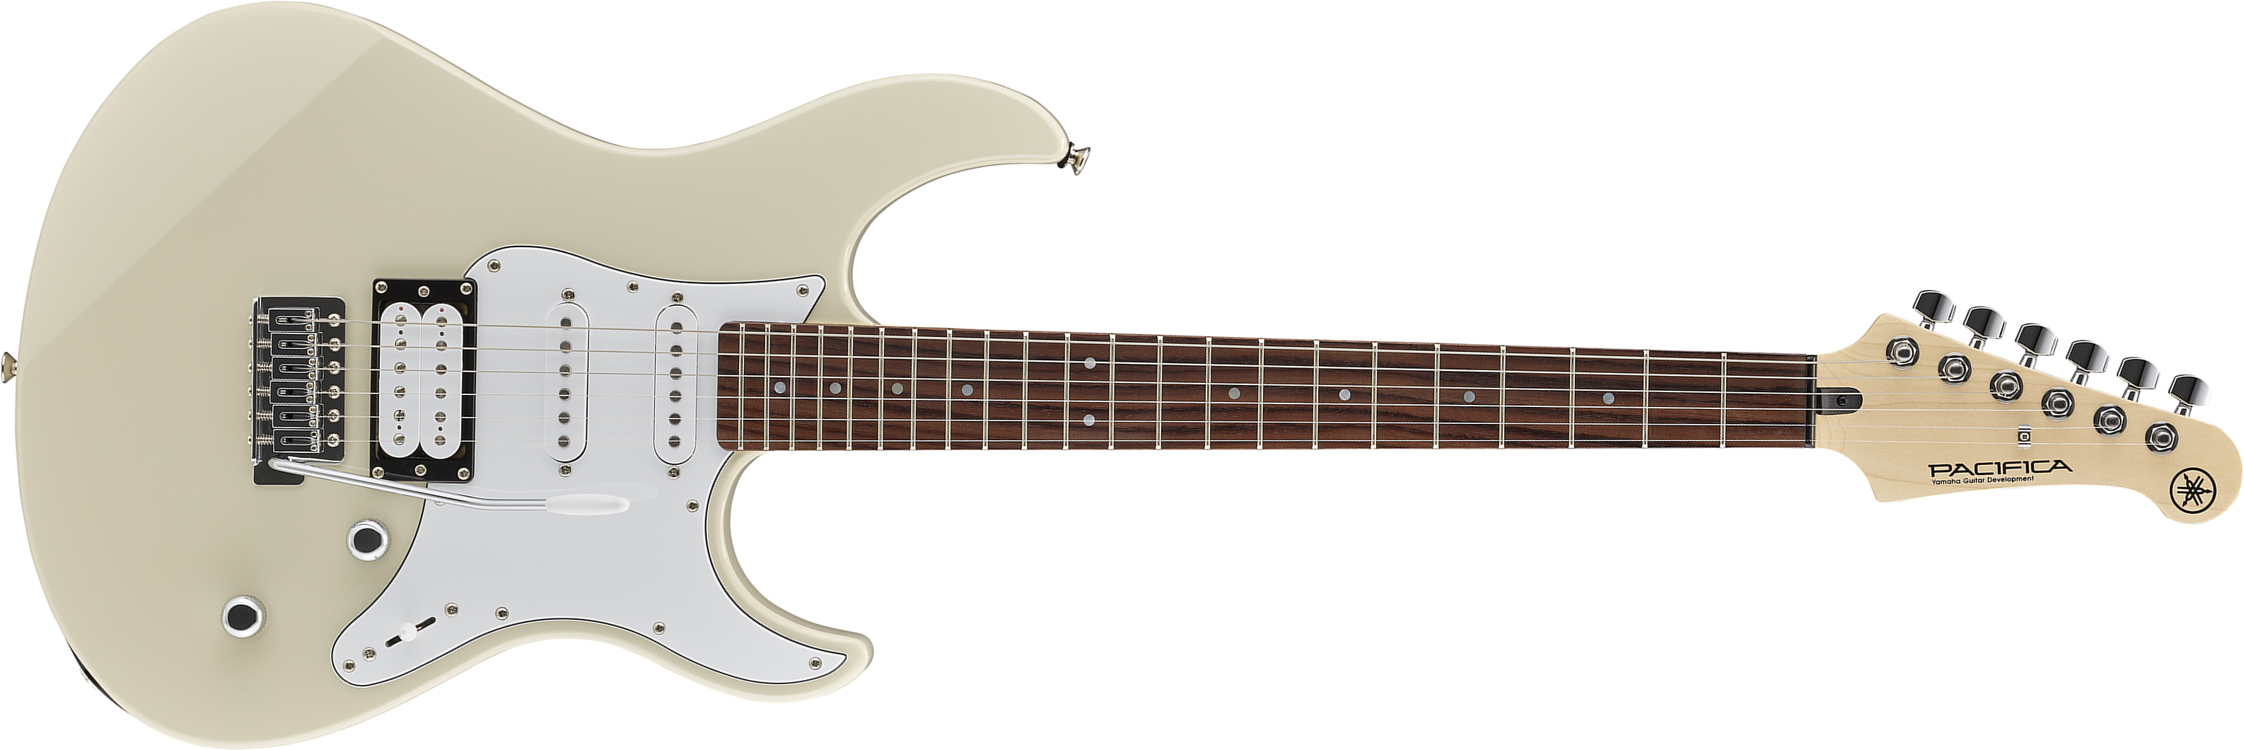 Yamaha Pacifica PAC112V - vintage white Str shape electric guitar